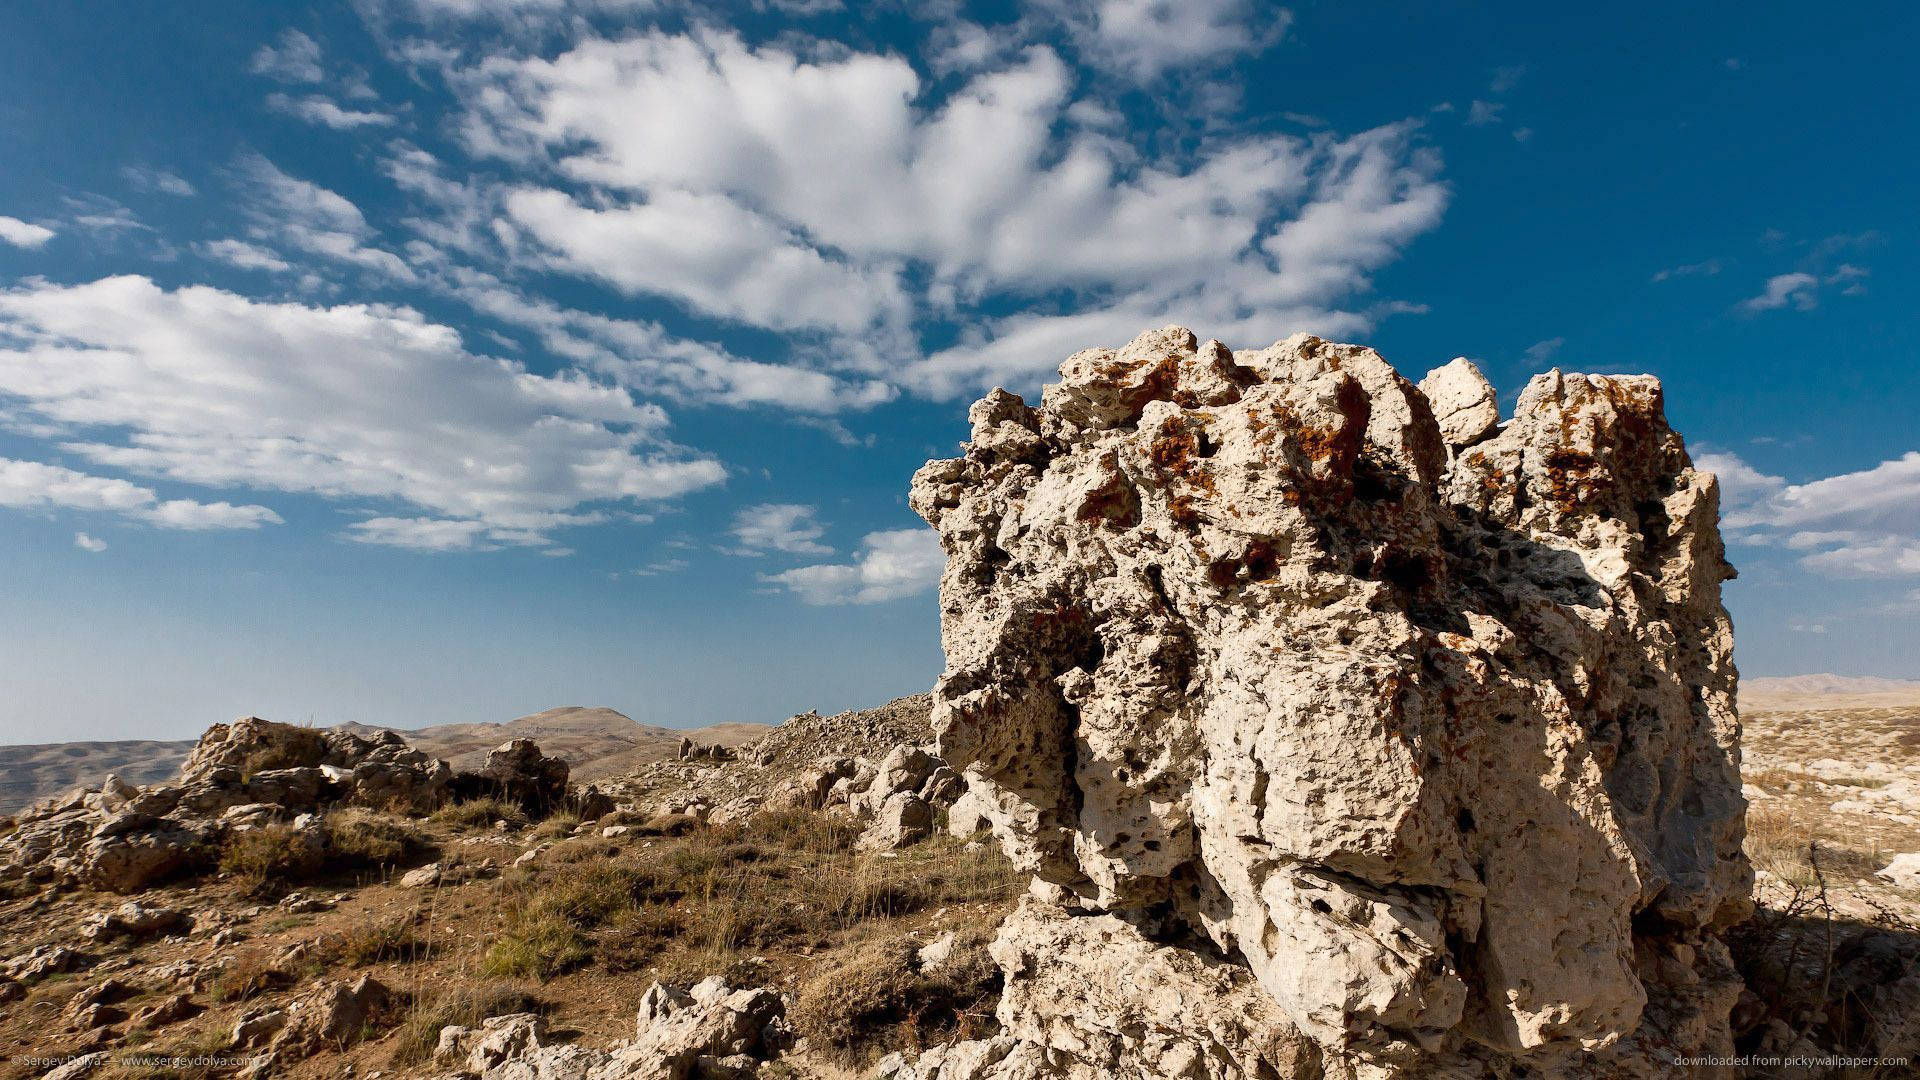 Lebanon Rock Formation